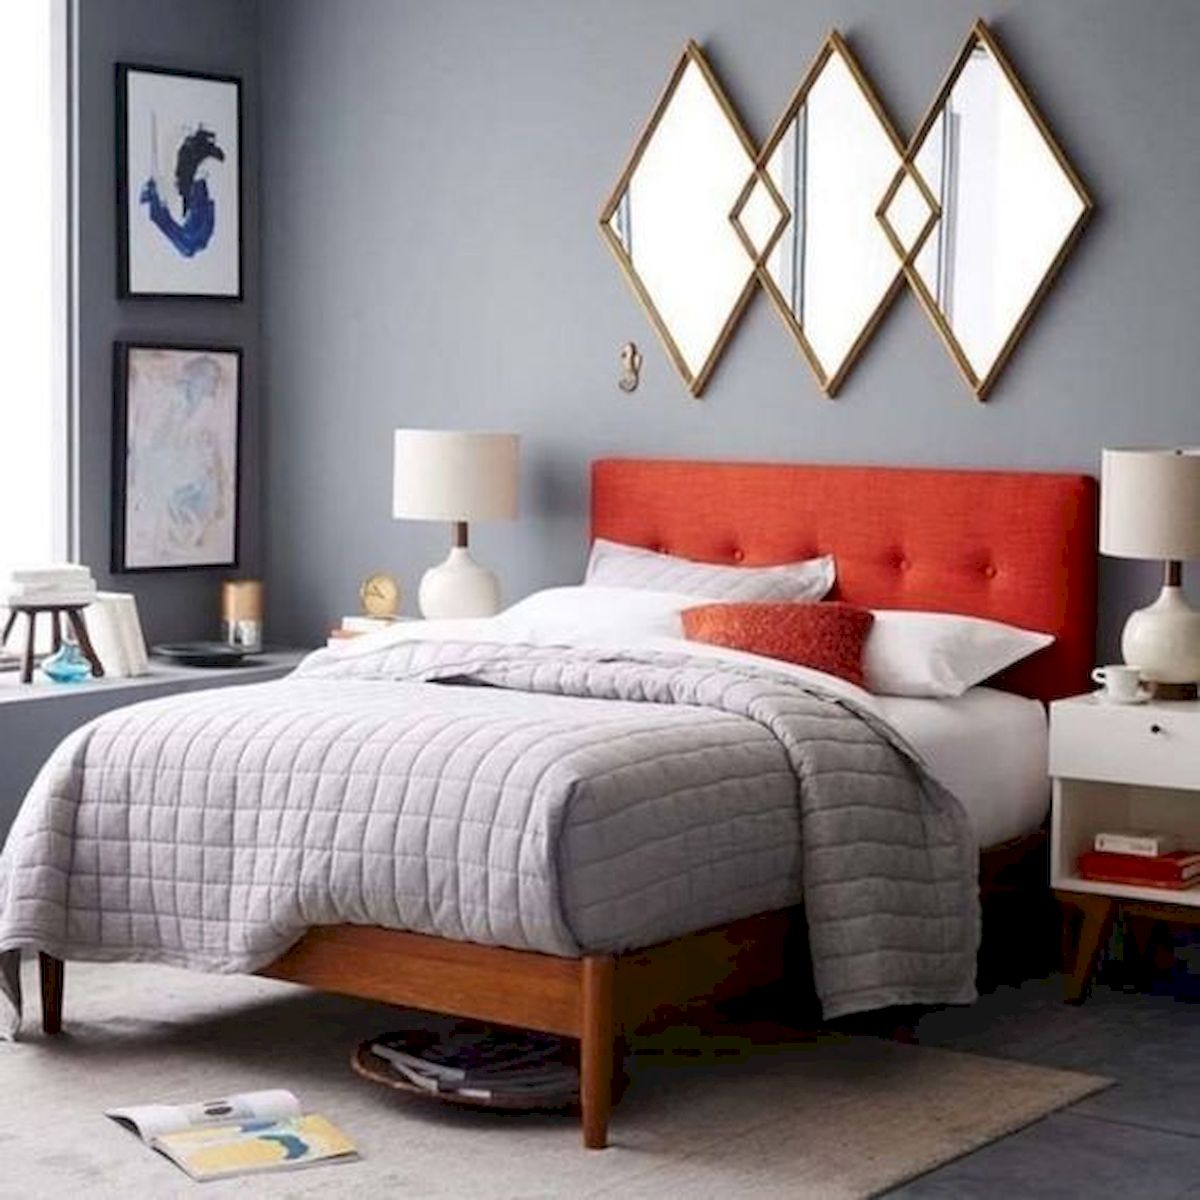 50 Amazing Modern Bedroom Decoration Ideas with Luxury Design (40)